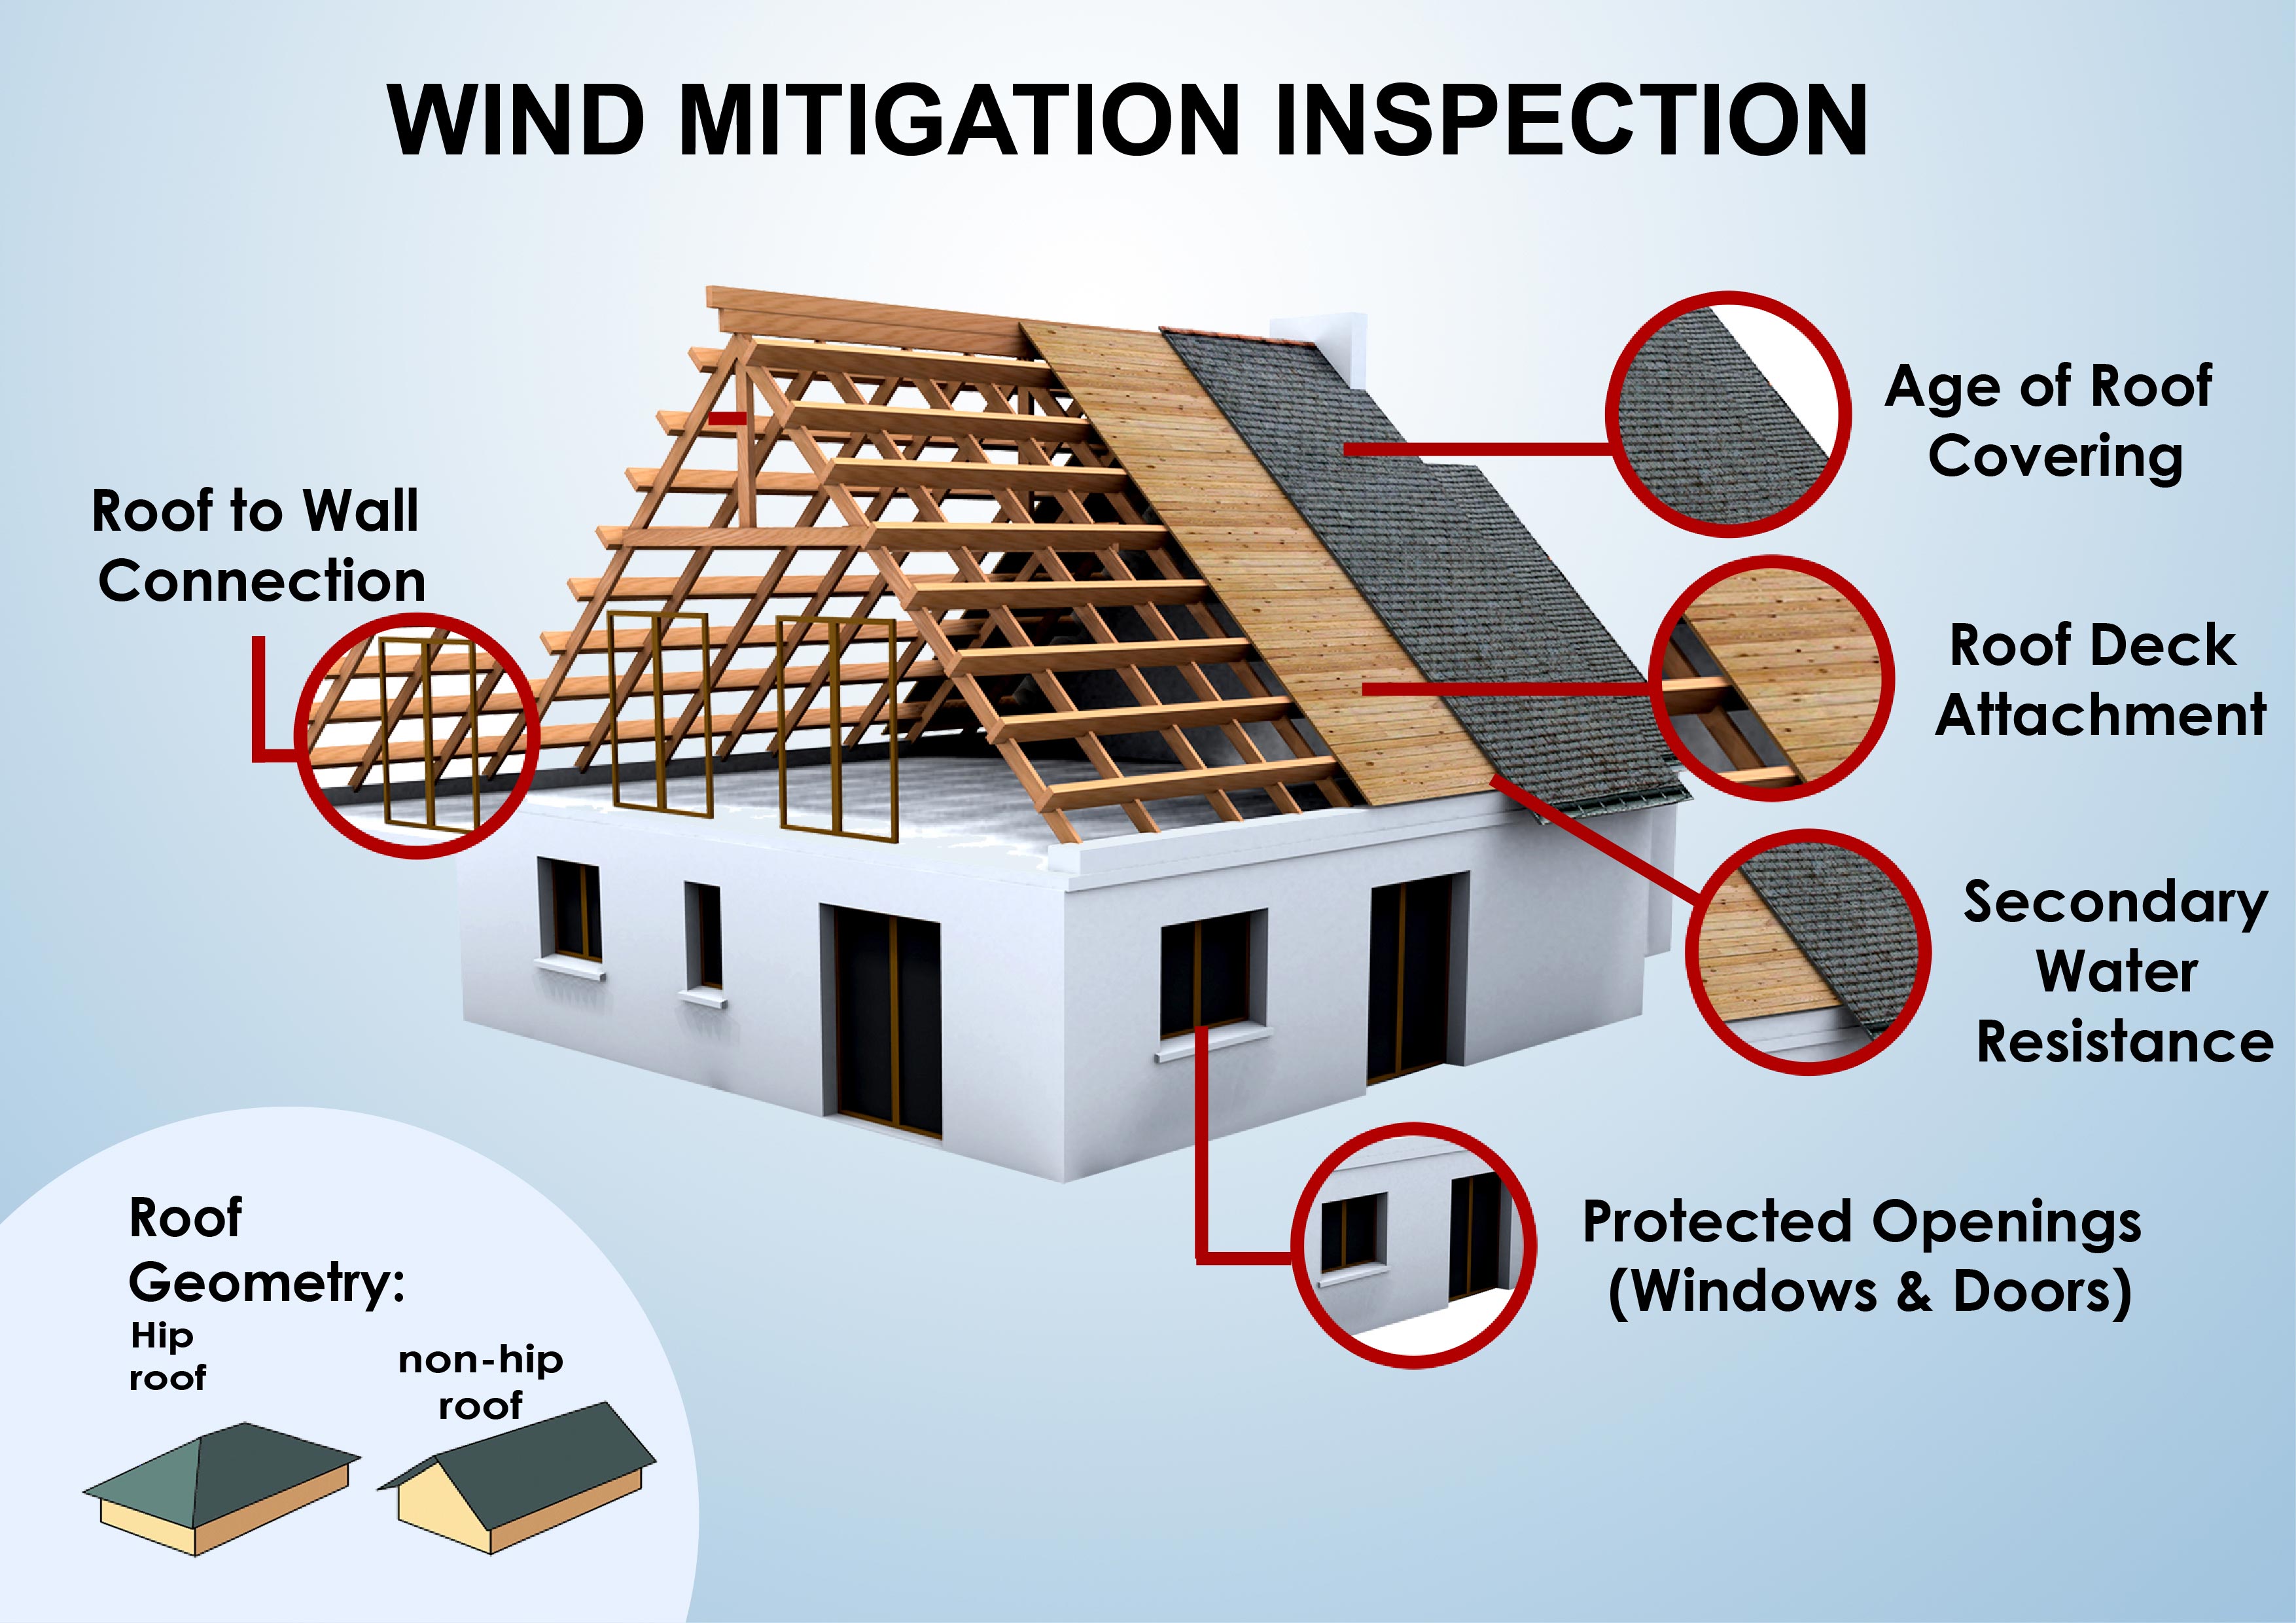 1515774104_Wind-Mitigation-Inspection-Diagram-SRQ-Inspections2.jpg